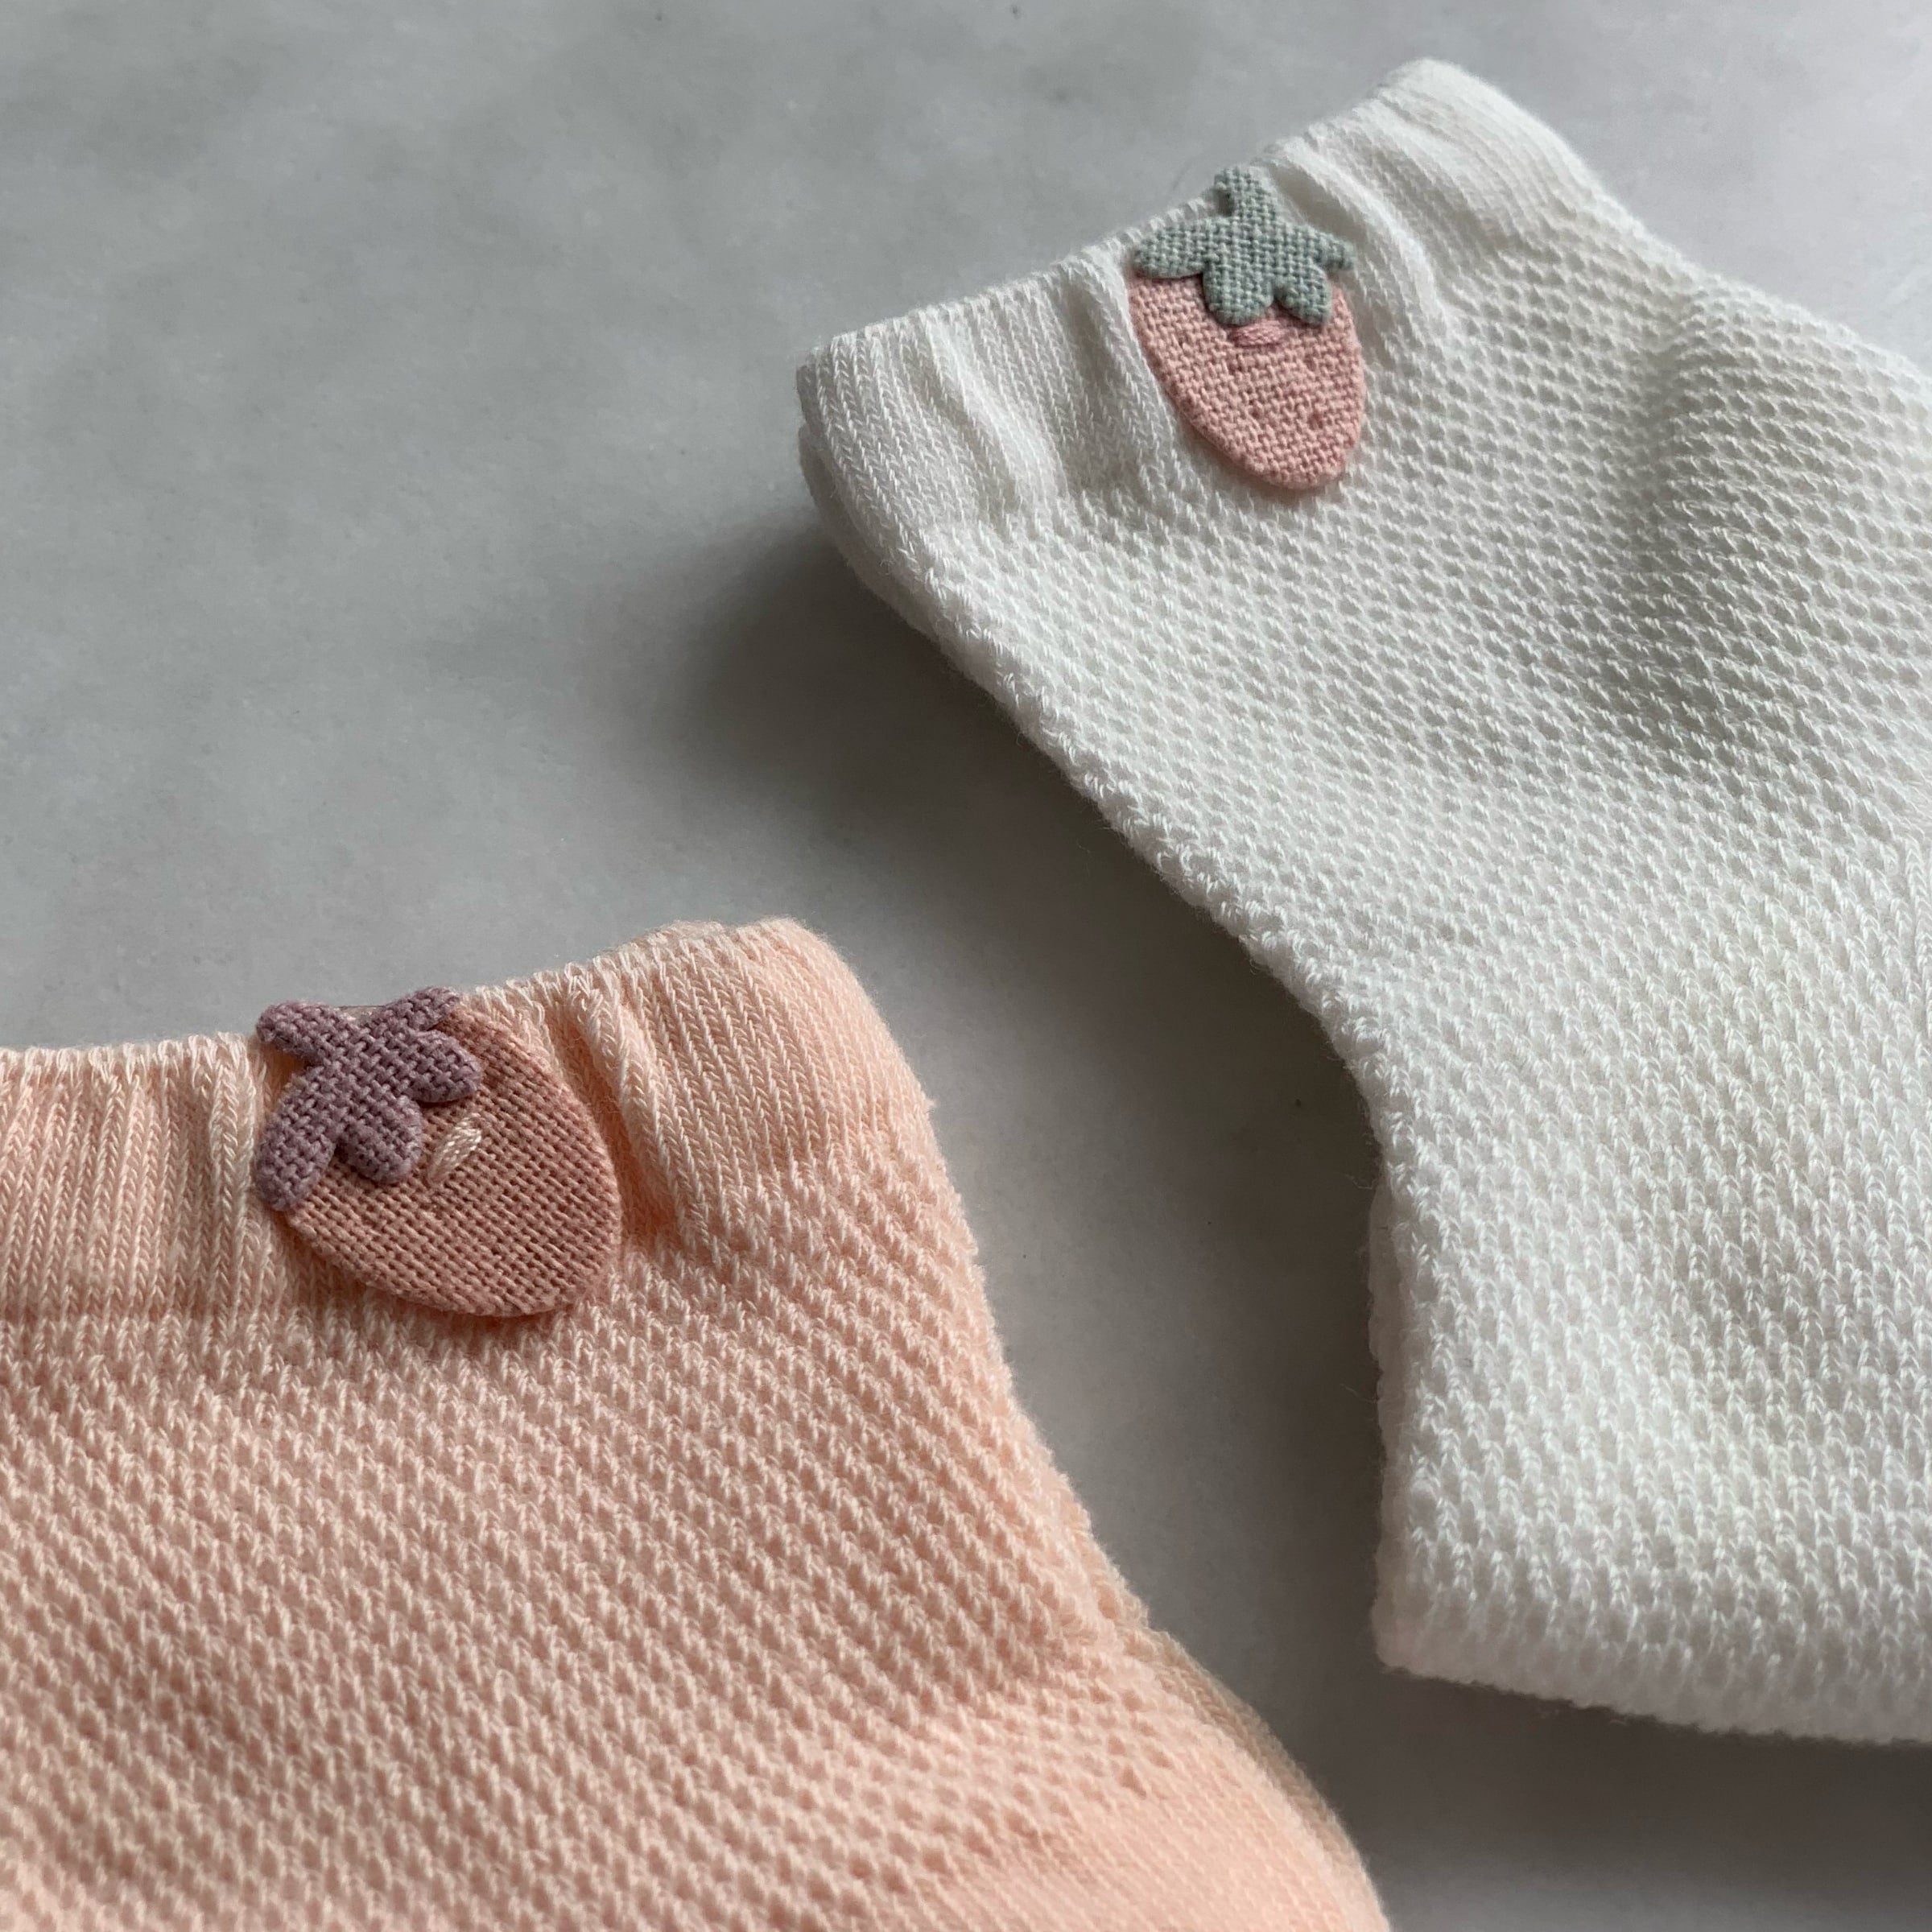 Cotton Strawberry Socks - Buy Socks at Louie Meets Lola